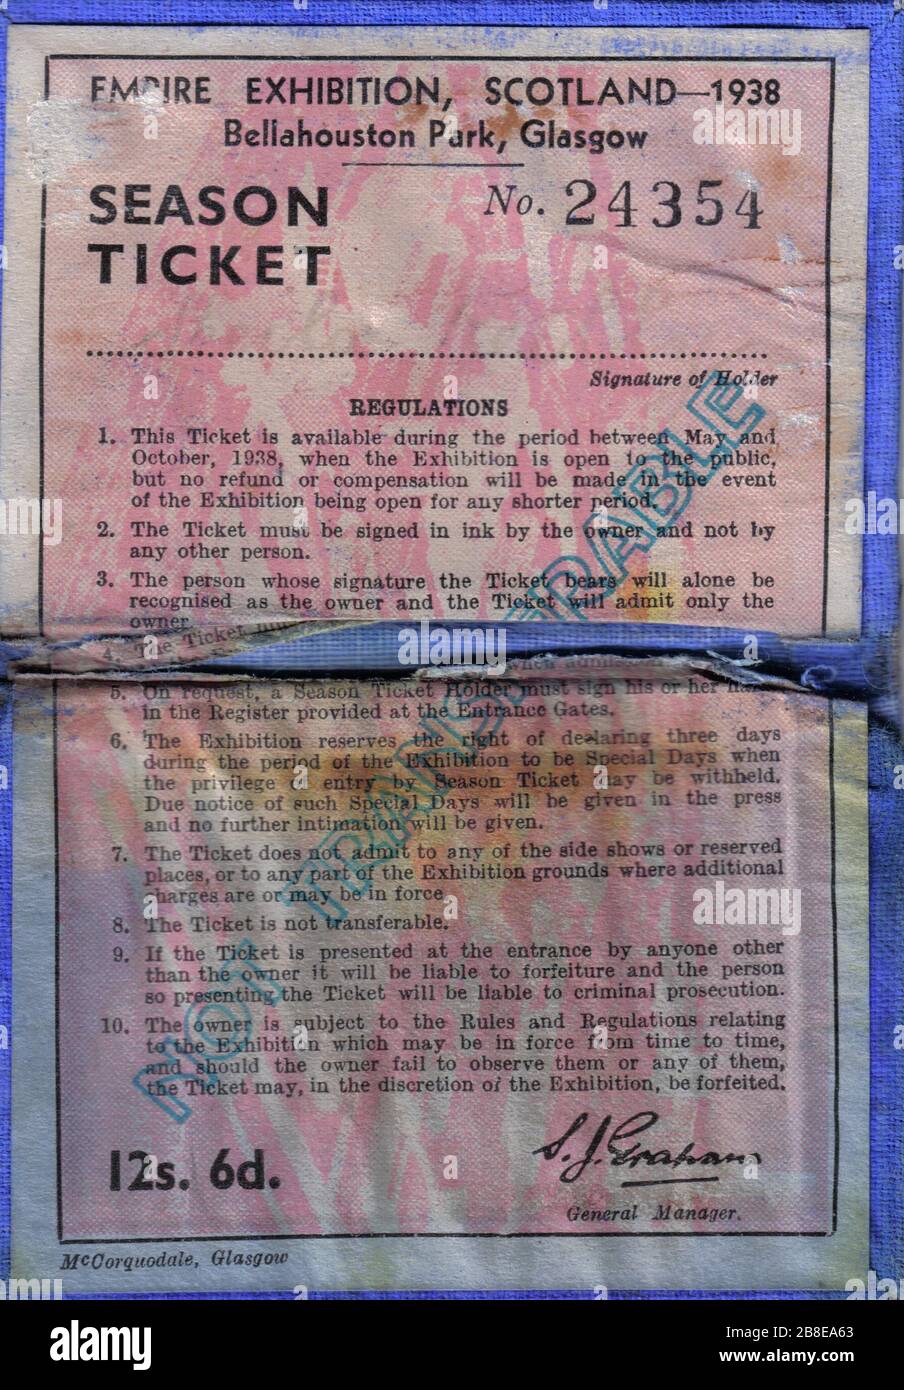 English: A 1938 Empire Exhibition Season Ticket. Glasgow - Bellahouston  Park, Scotland.Rosser 13:28, 14 August 2007 (UTC); 14 August 2007 (original  upload date); Own workTransferred from en.wikipedia; Rosser1954 at en. wikipedia Stock Photo - Alamy